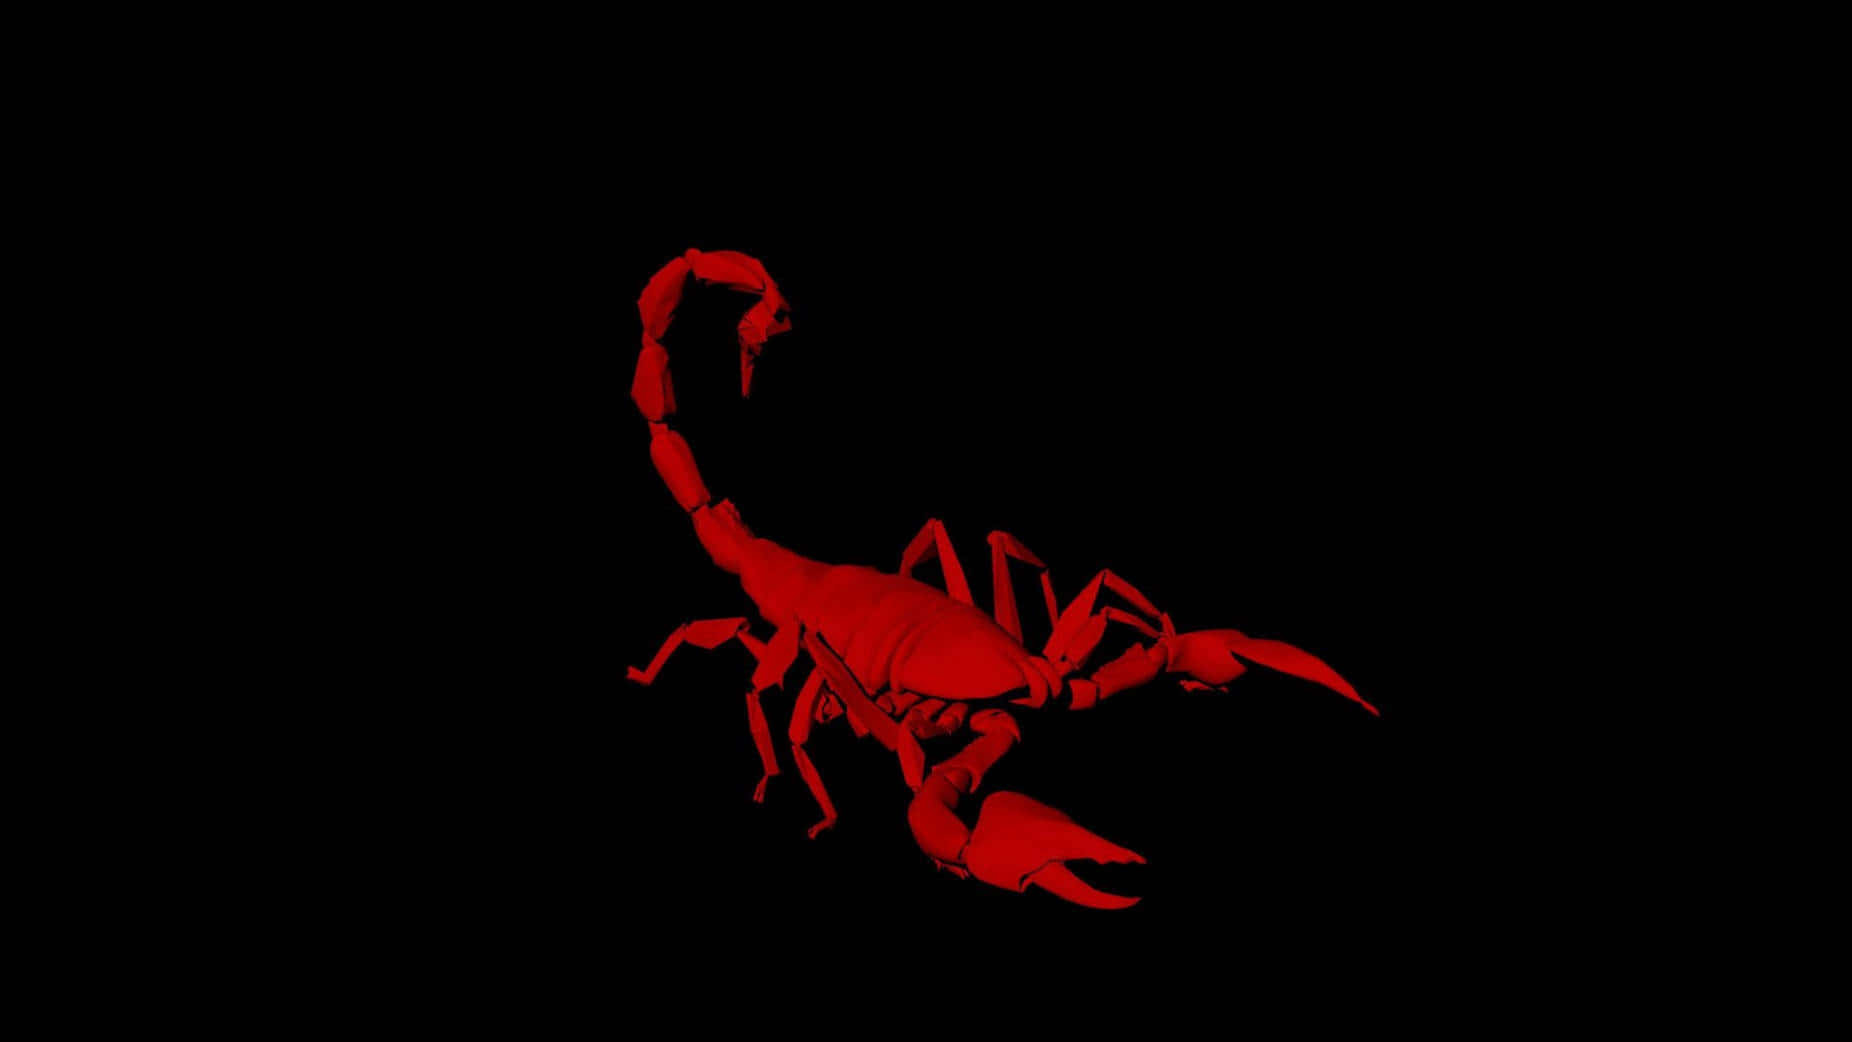 The fierce Red Scorpion lurking in the darkness. Wallpaper